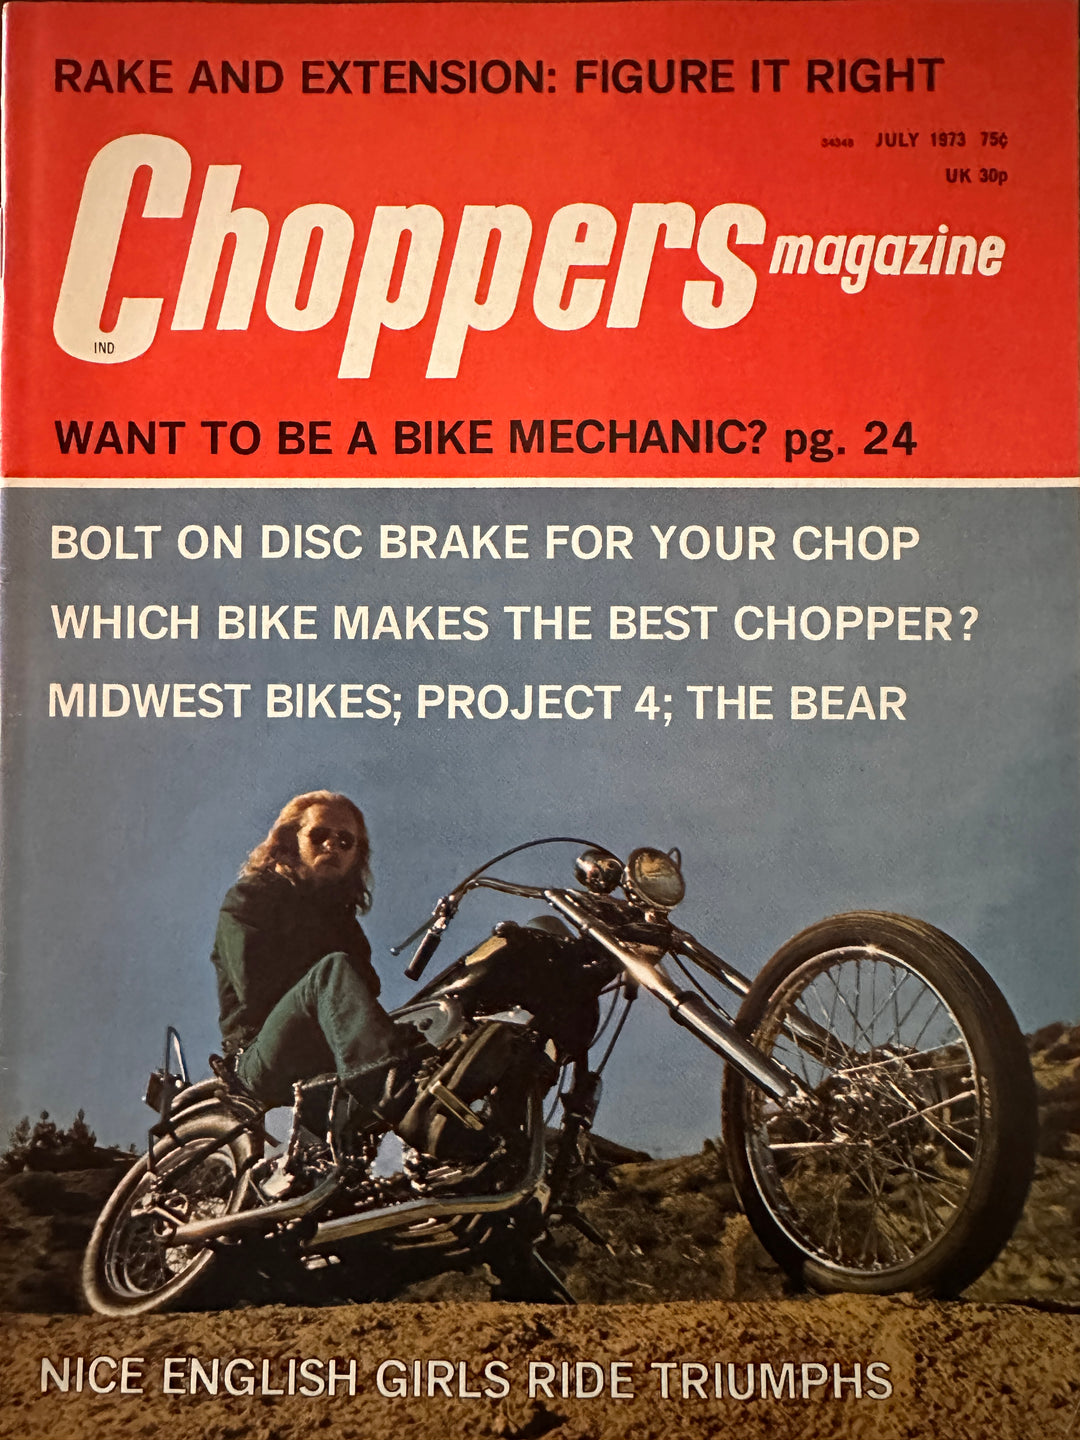 Want to be a Chopper Mechanic?